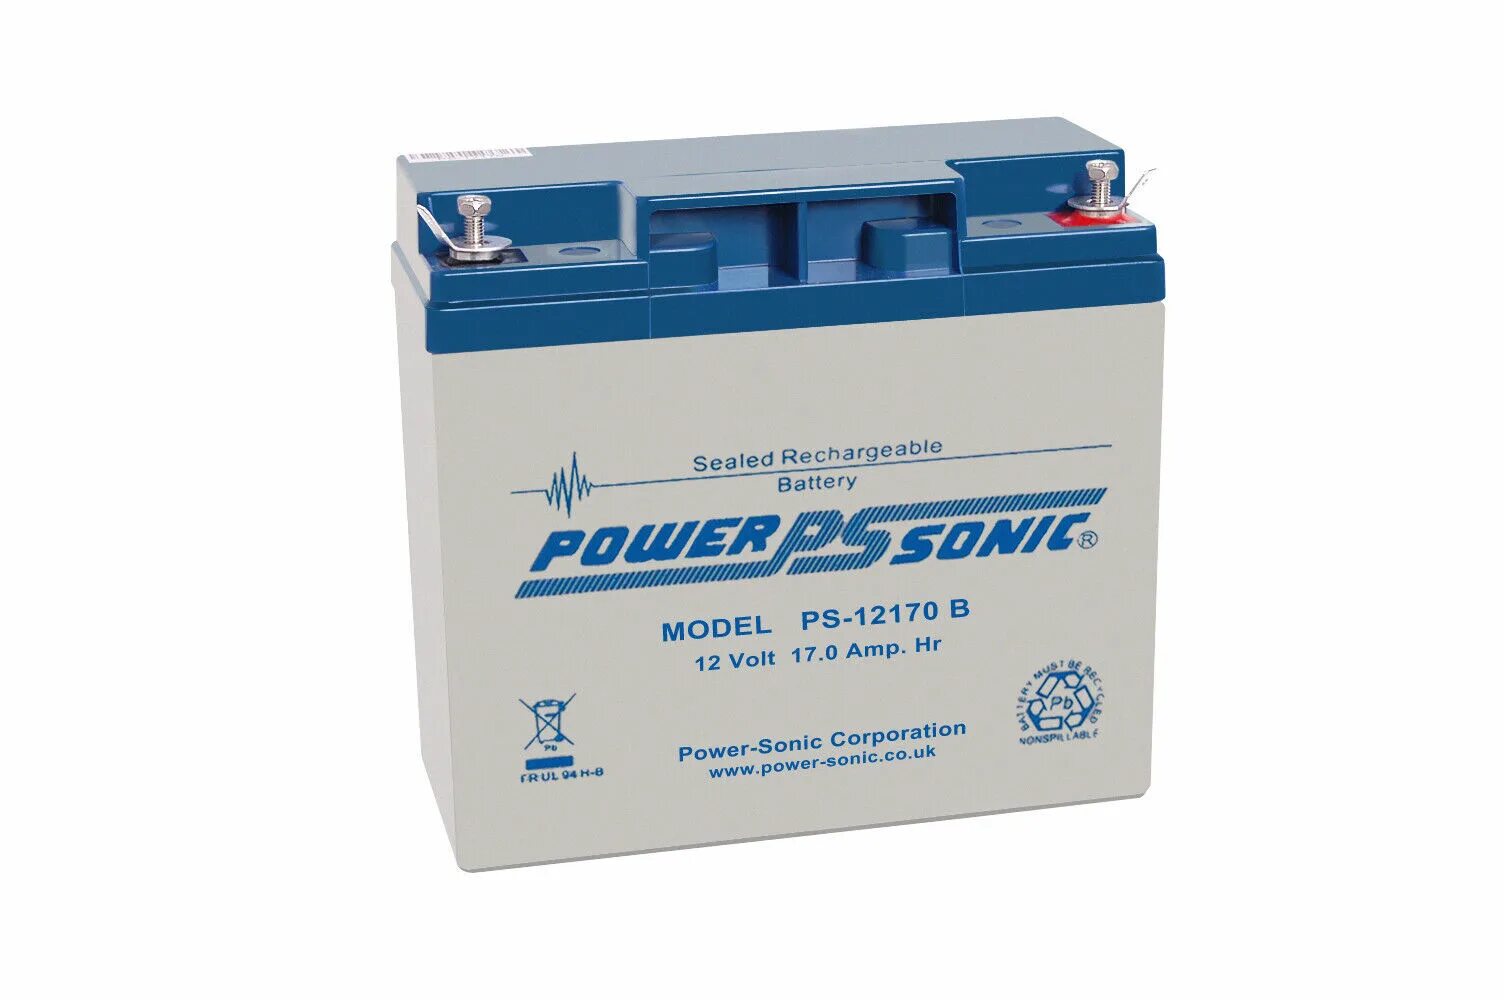 Www 12v. Аккумулятор Daewoo SP Battery 12v 9ah. Аккумулятор Power Sonic PS-1212 12v, 1.4. Lead acid 12 v 5ah аккумулятор. Daewoo SP Battery аккумулятор 12v 32ah t6.